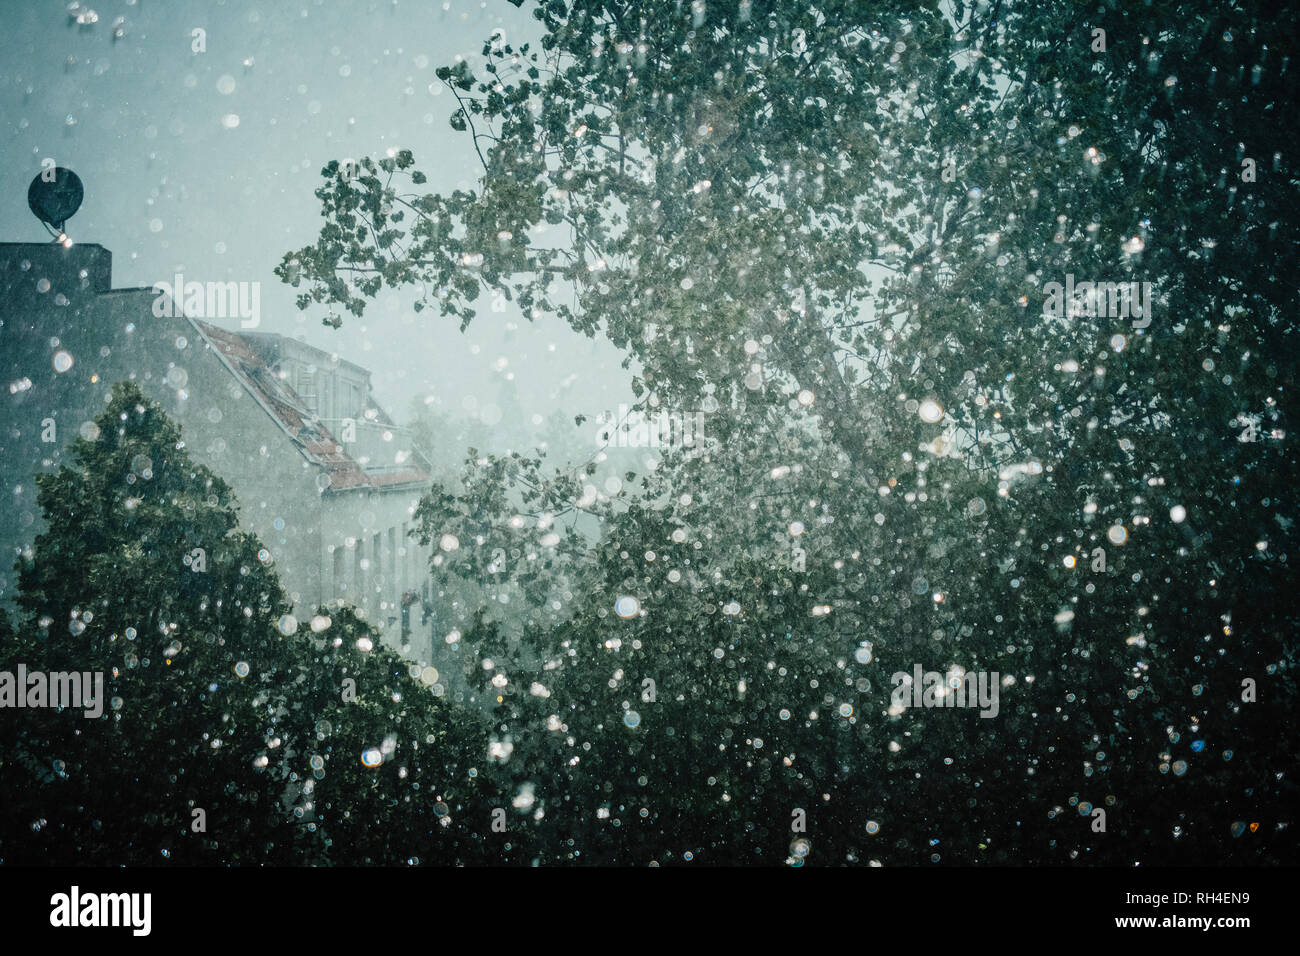 Ethereal raindrops on window overlooking tree Stock Photo